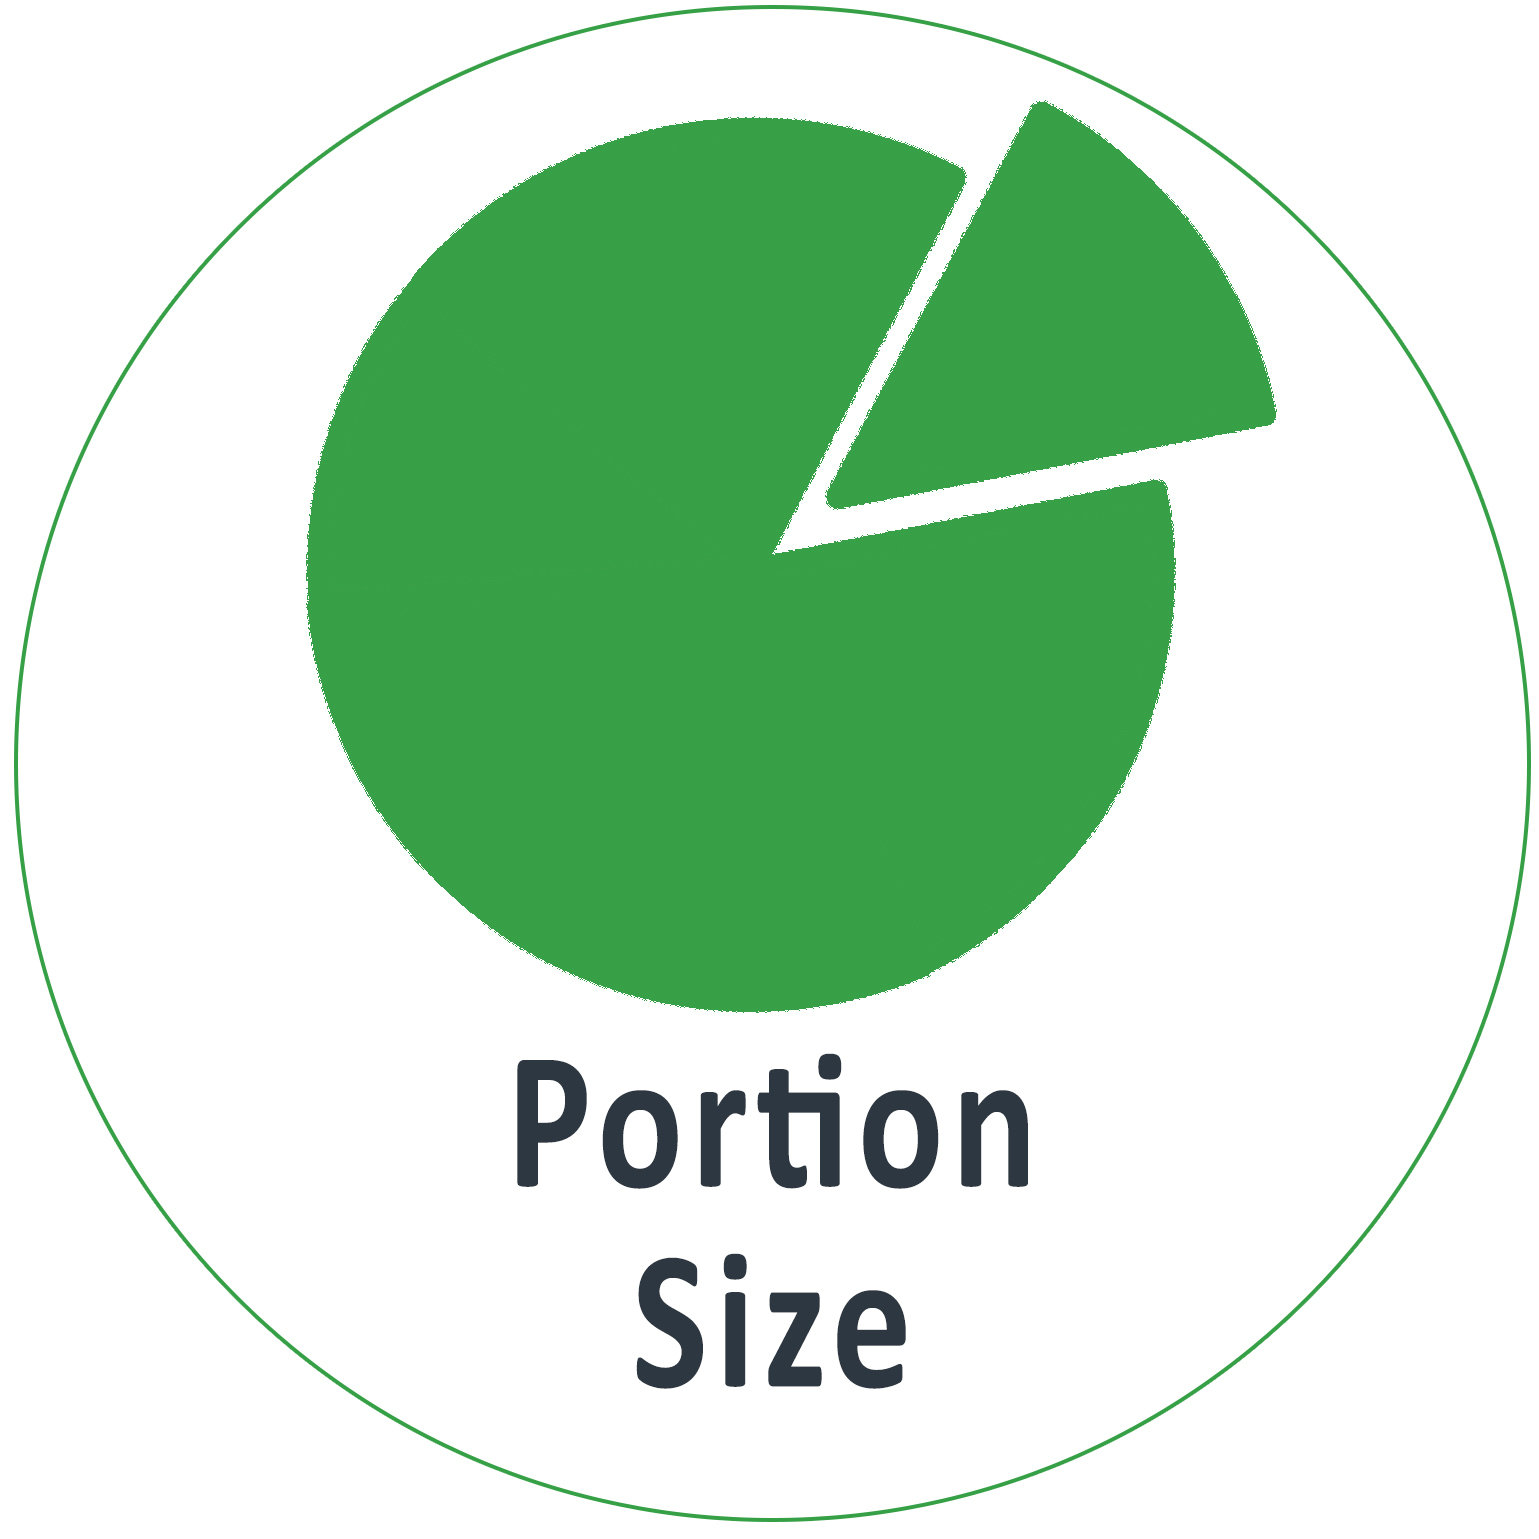 Portion Size 